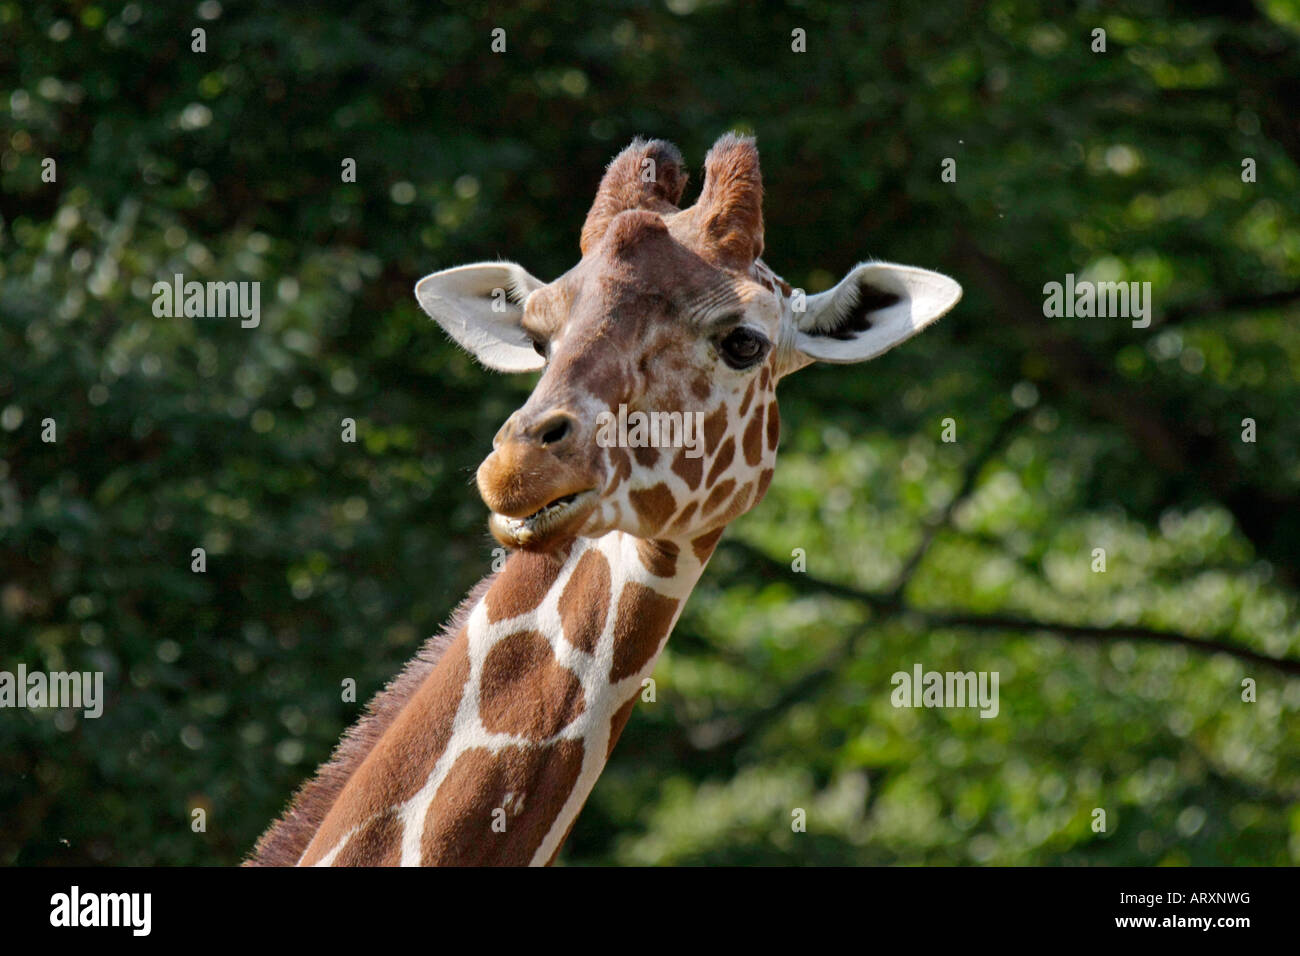 A Giraffe in the Zoo Stock Photo